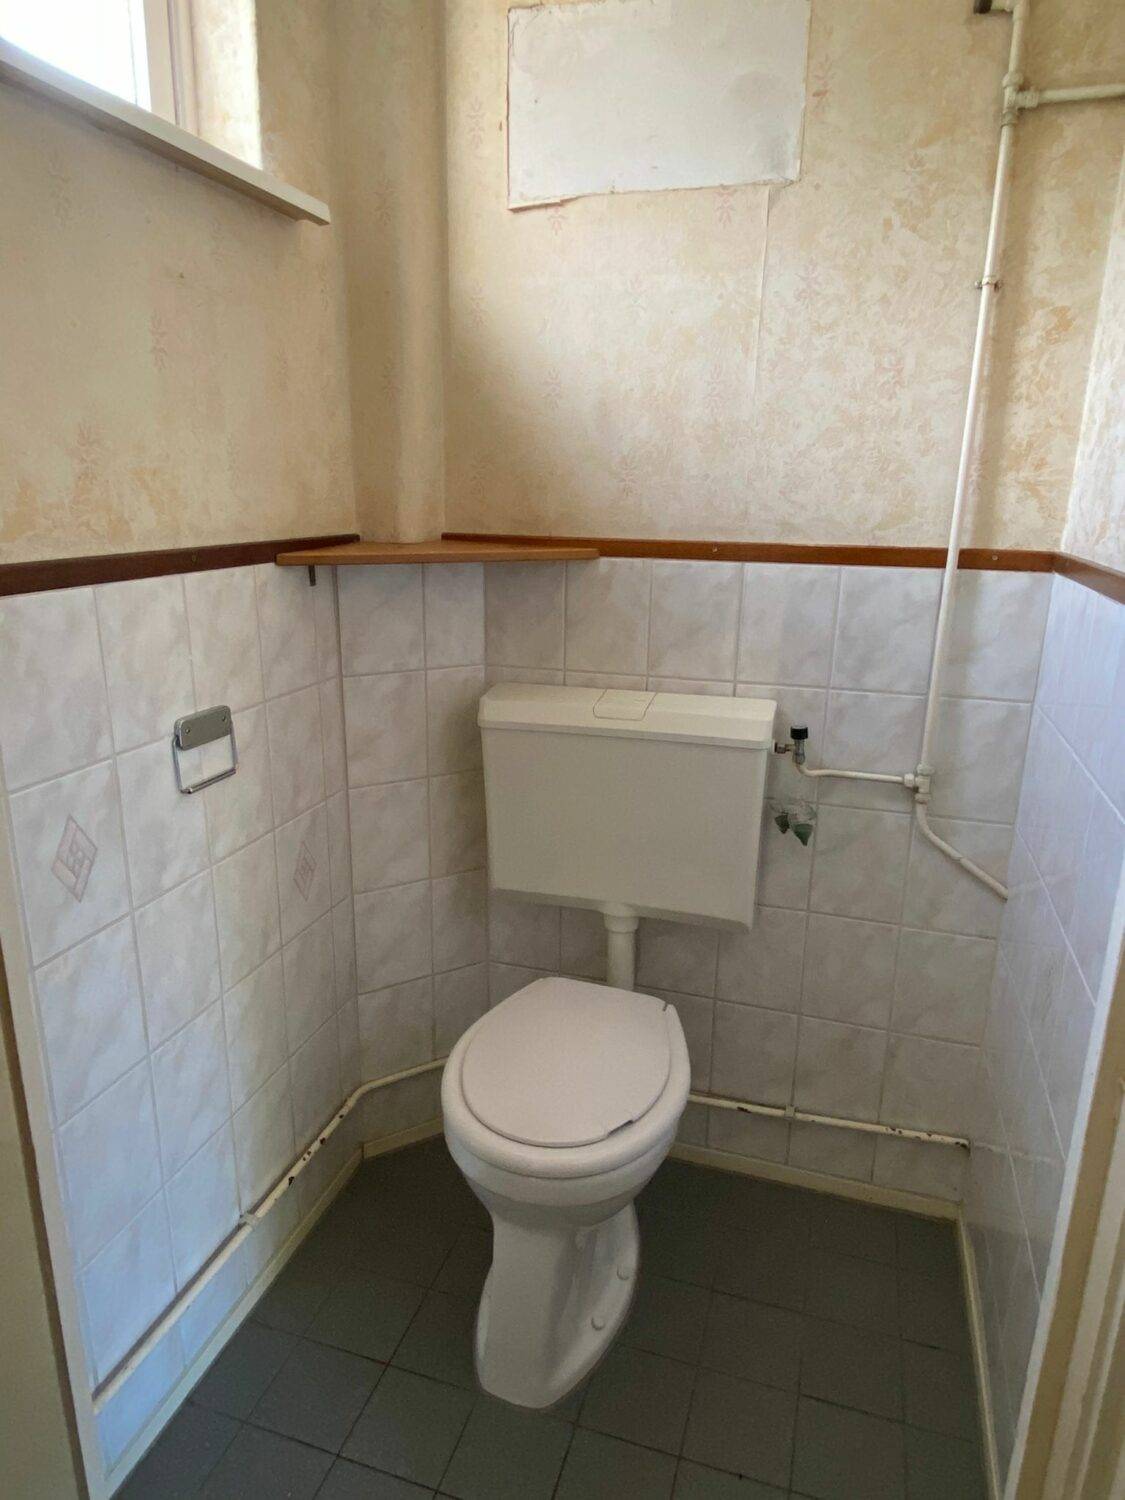 09 toilet